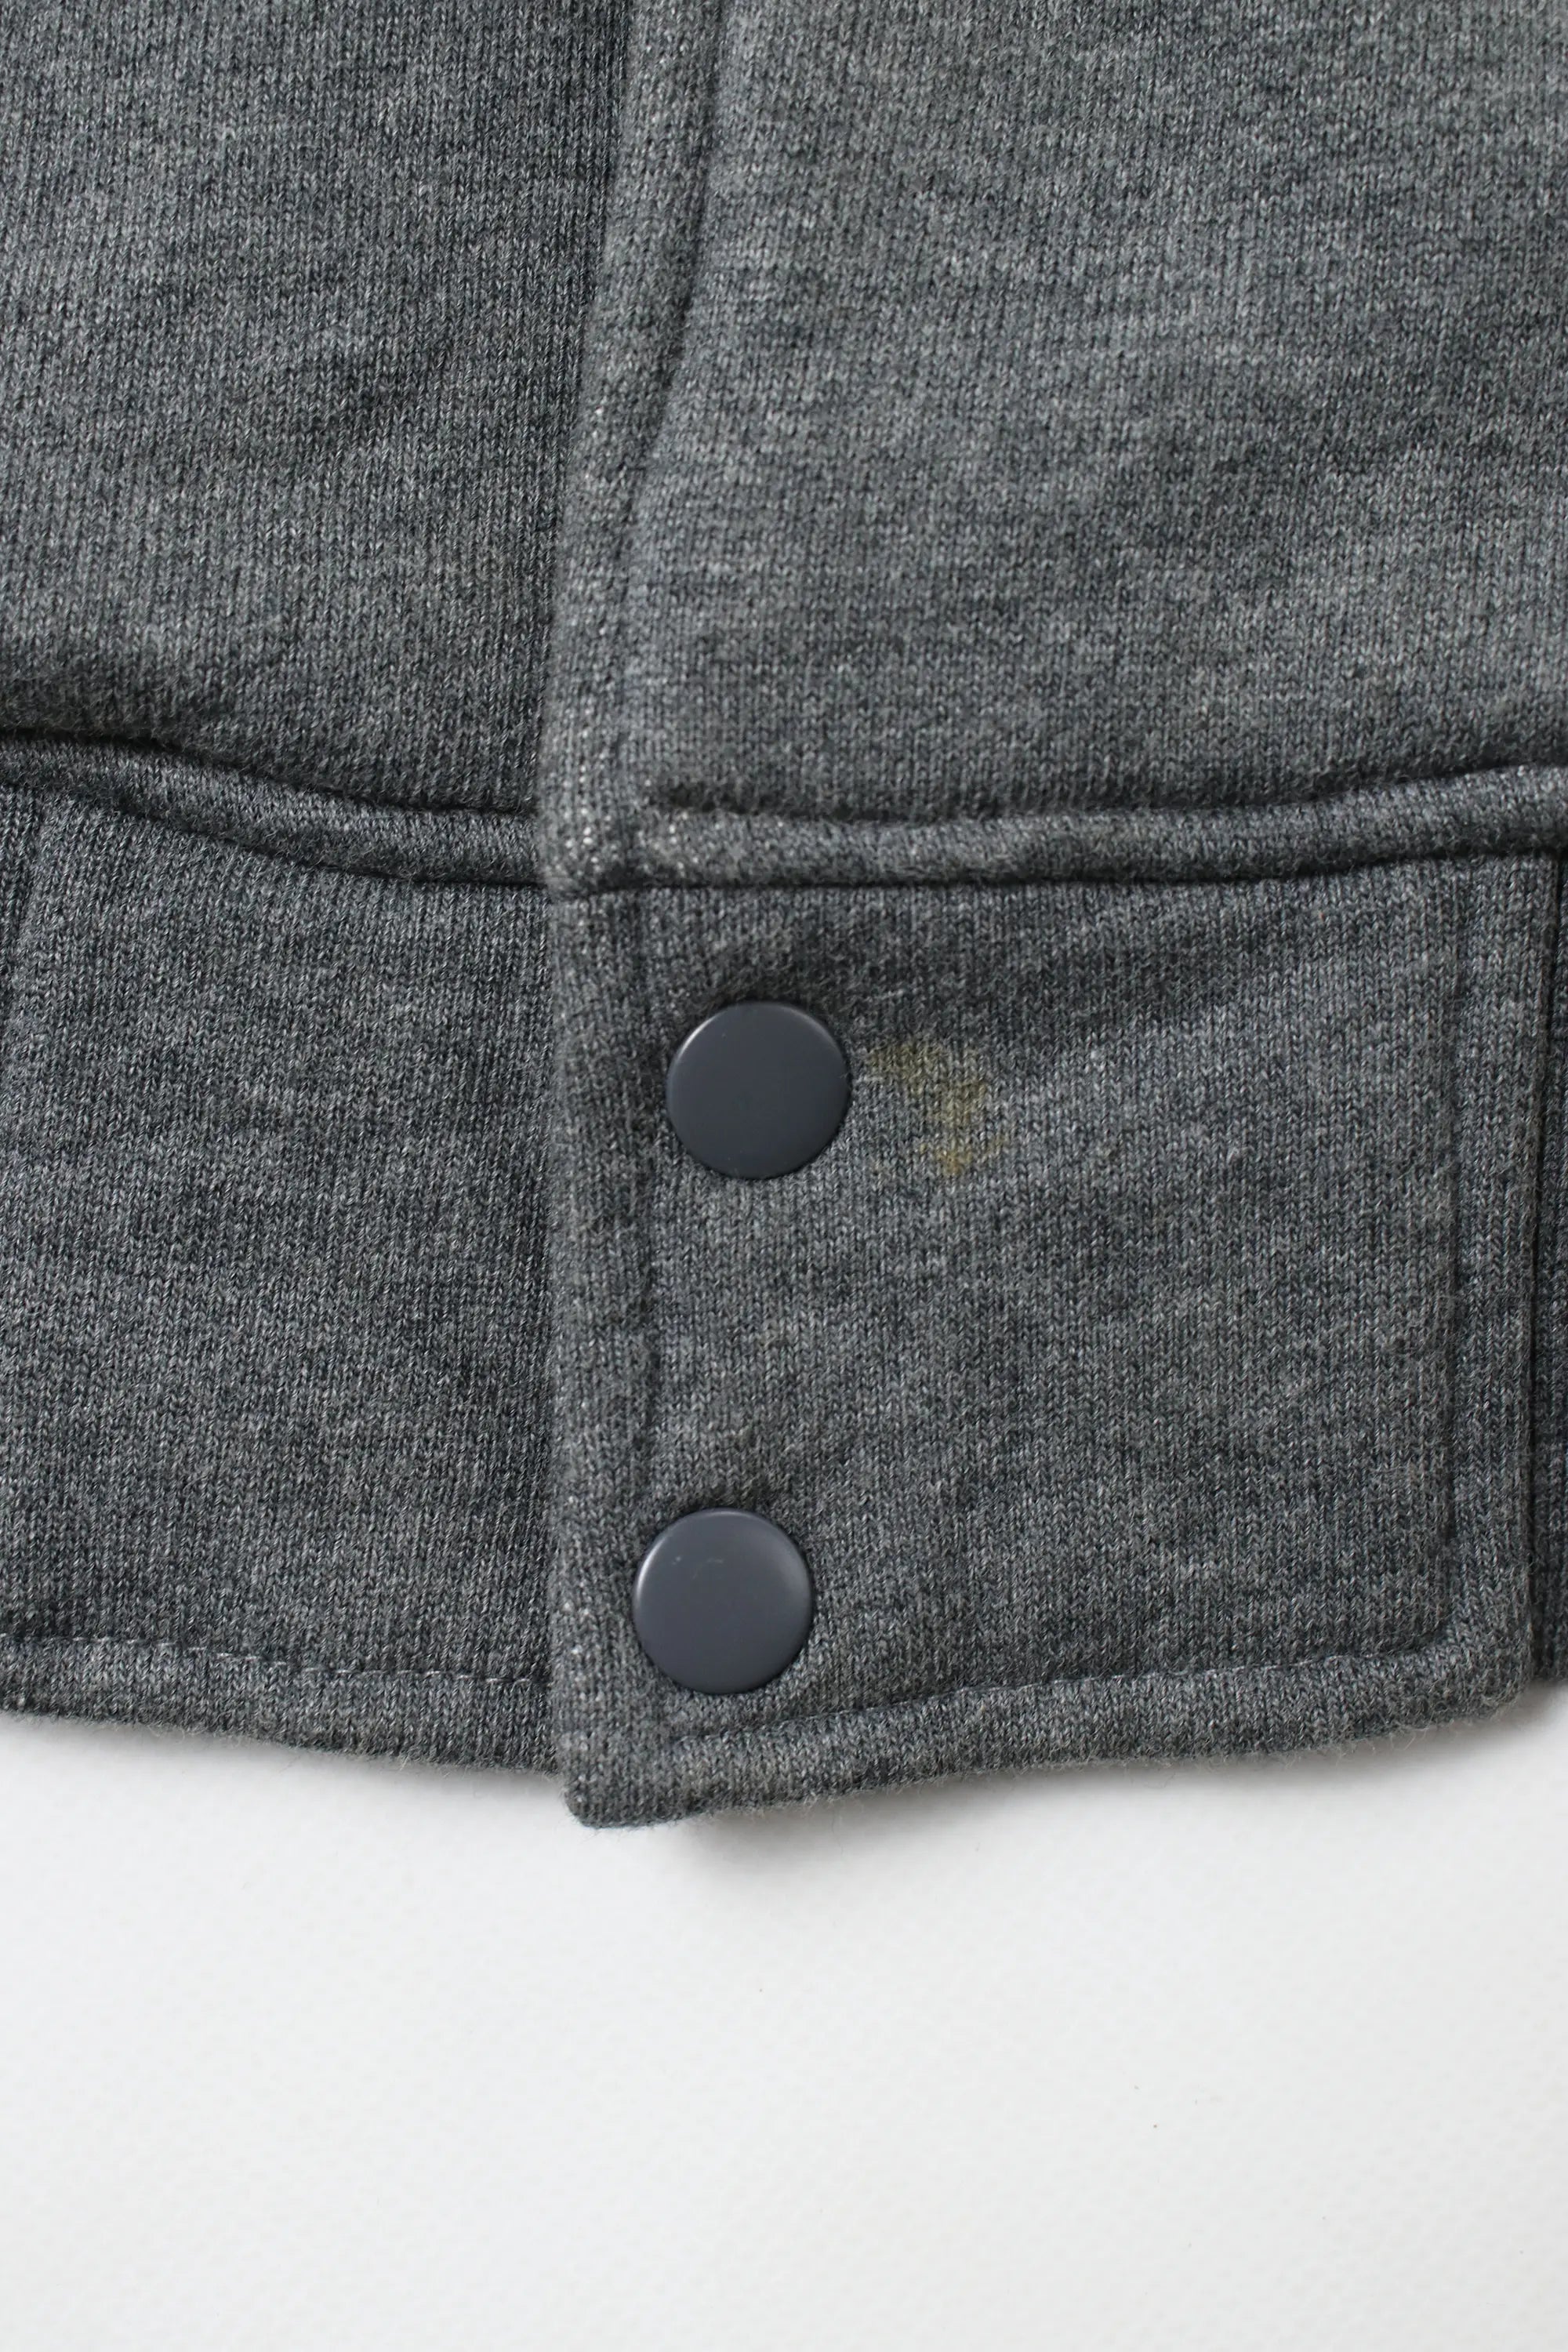 Adidas Button Jacket